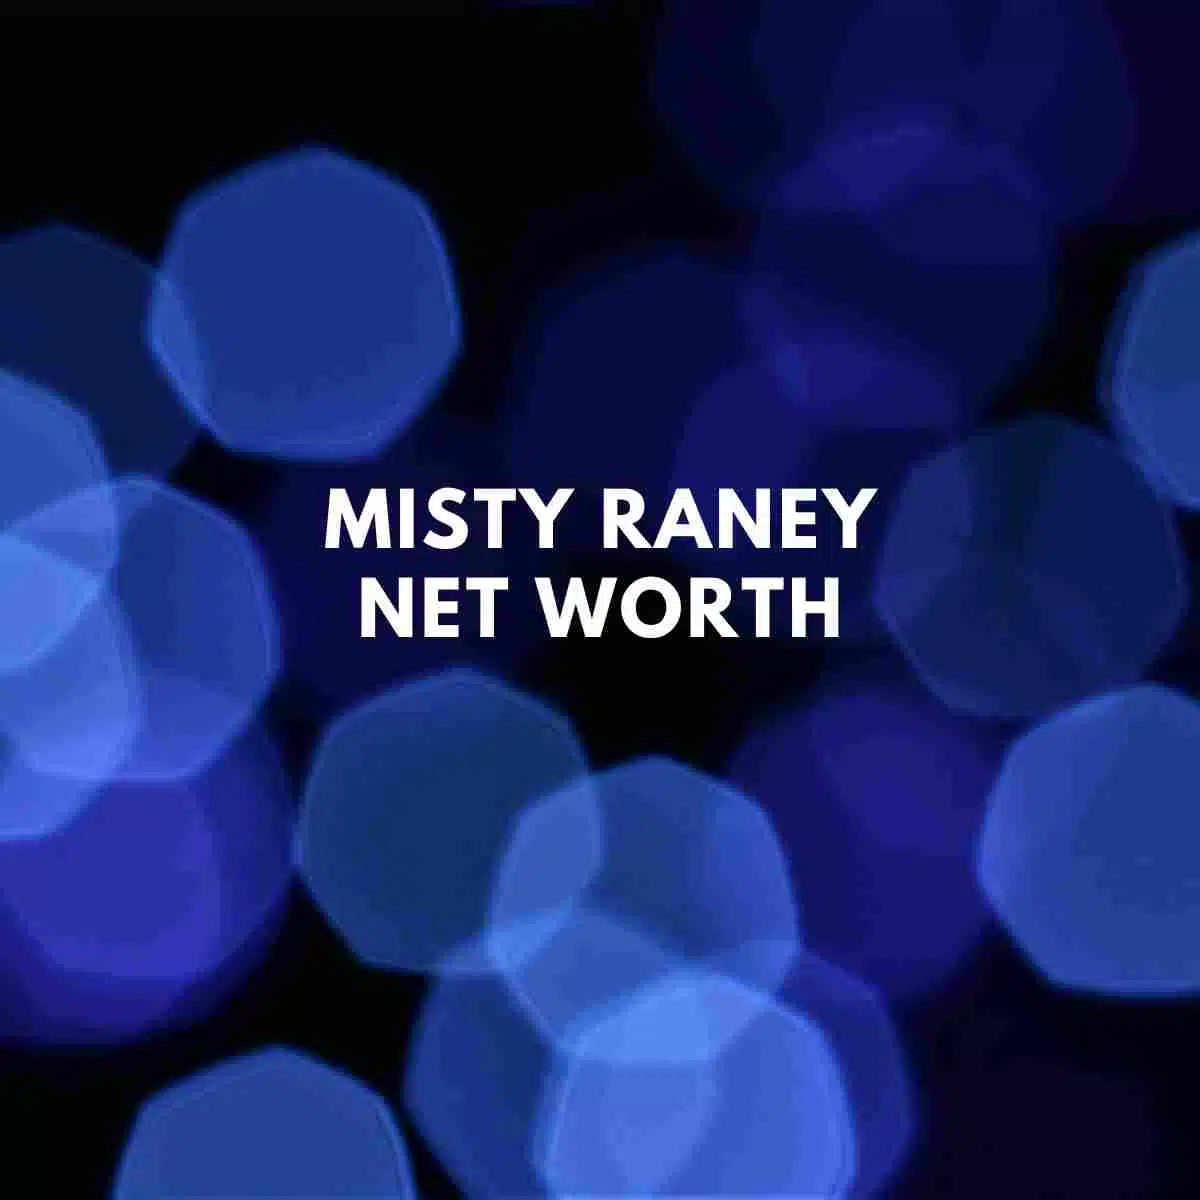 Misty Raney net worth